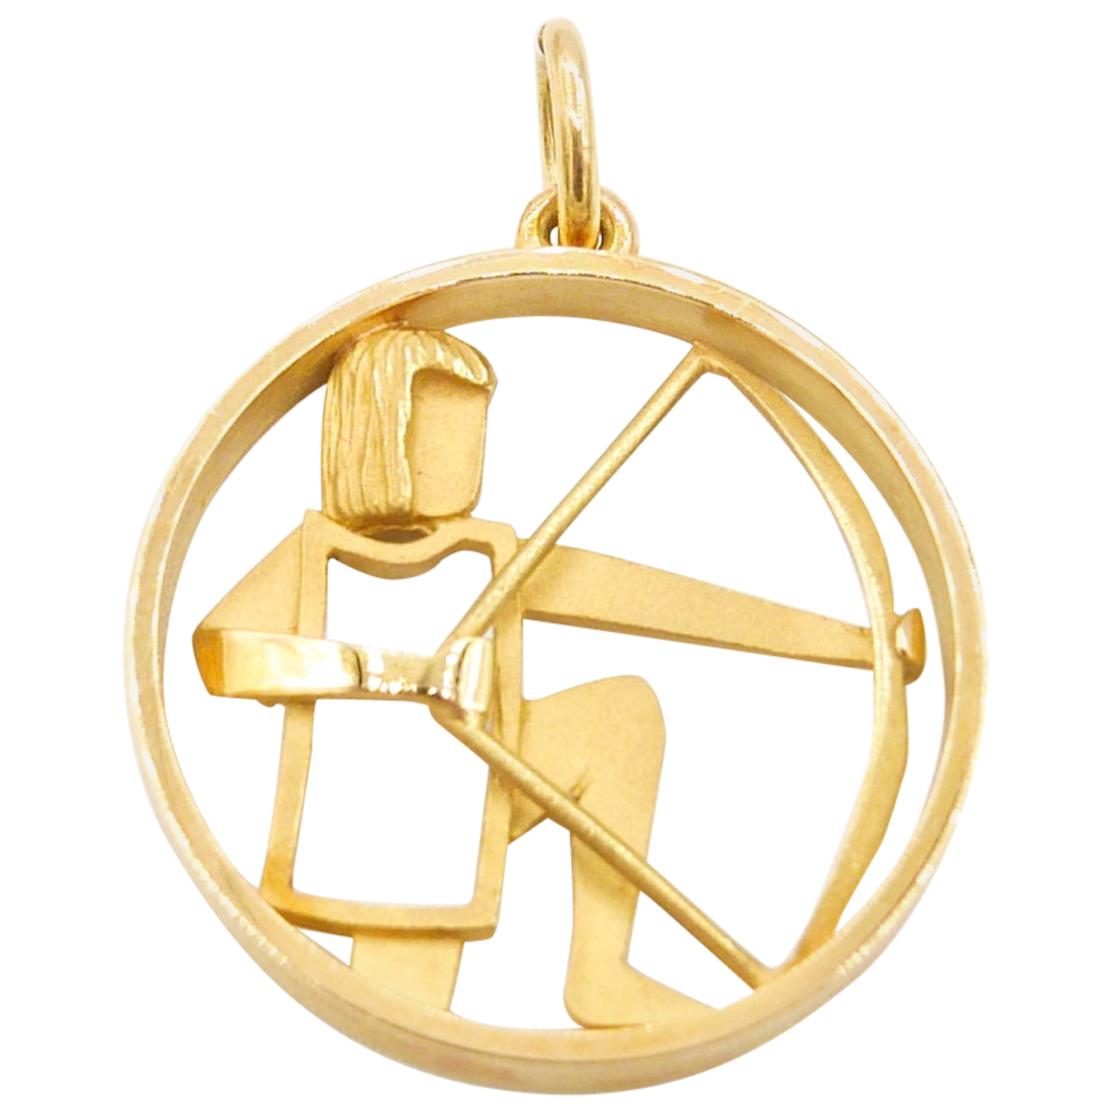 Güeblin, breloque/pendentif en or 18 carats représentant le signe astrologique du signe du zodiaque Sagittarius